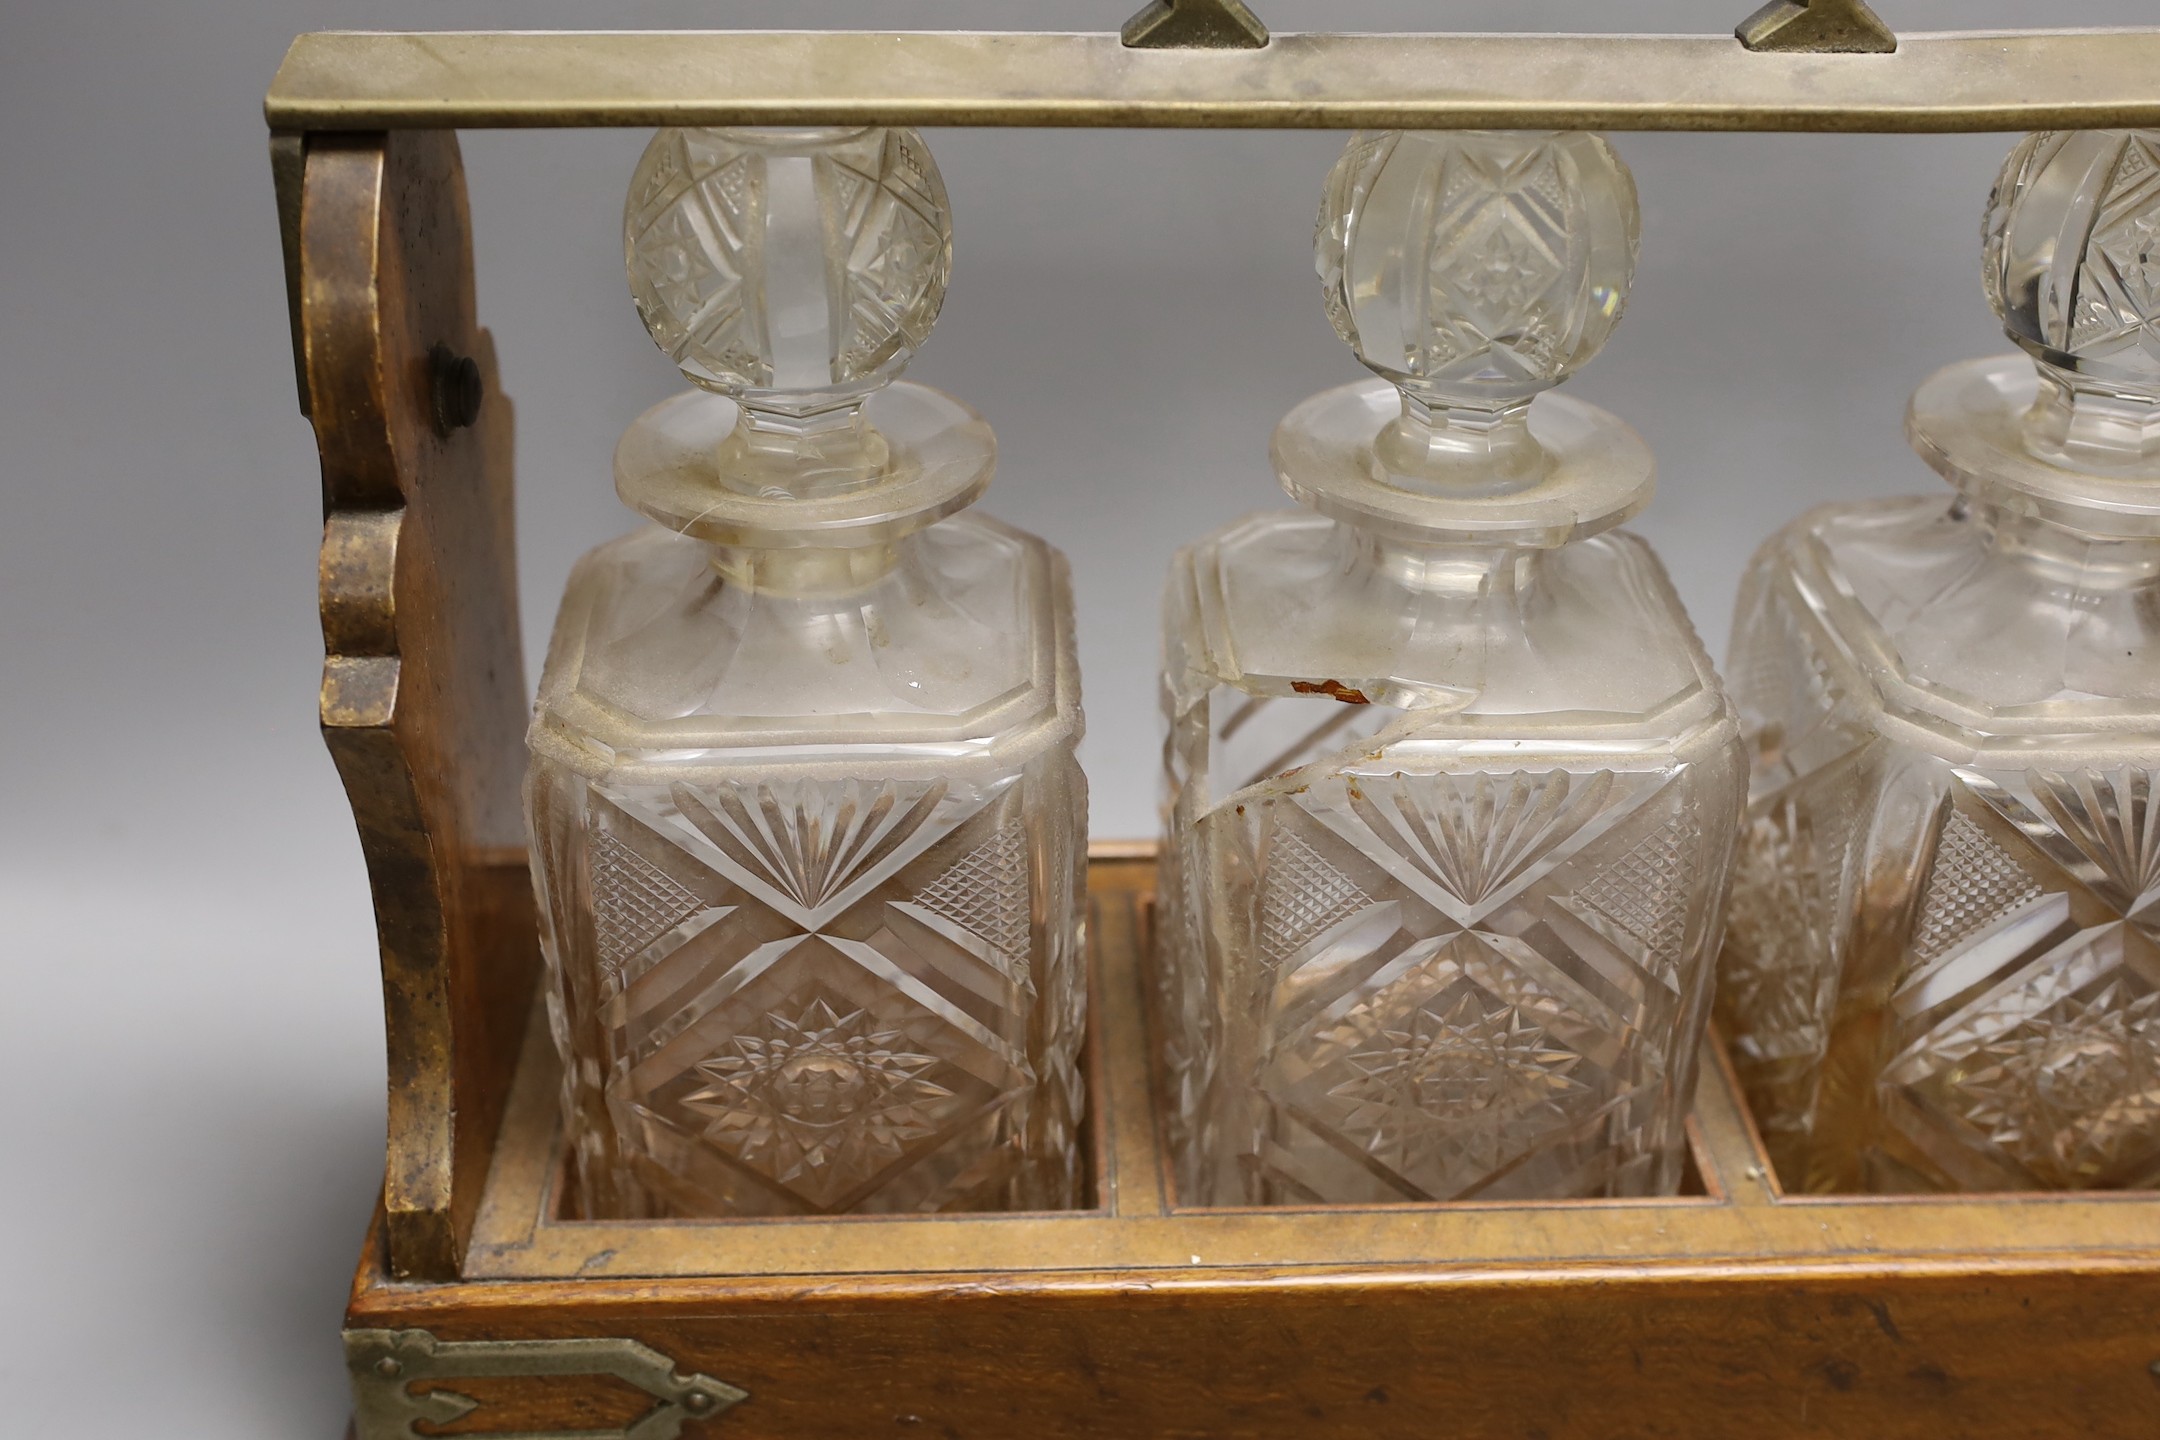 A Victorian Betjemann’s patent oak cased three bottle tantalus (a.f.), 42cms wide at base